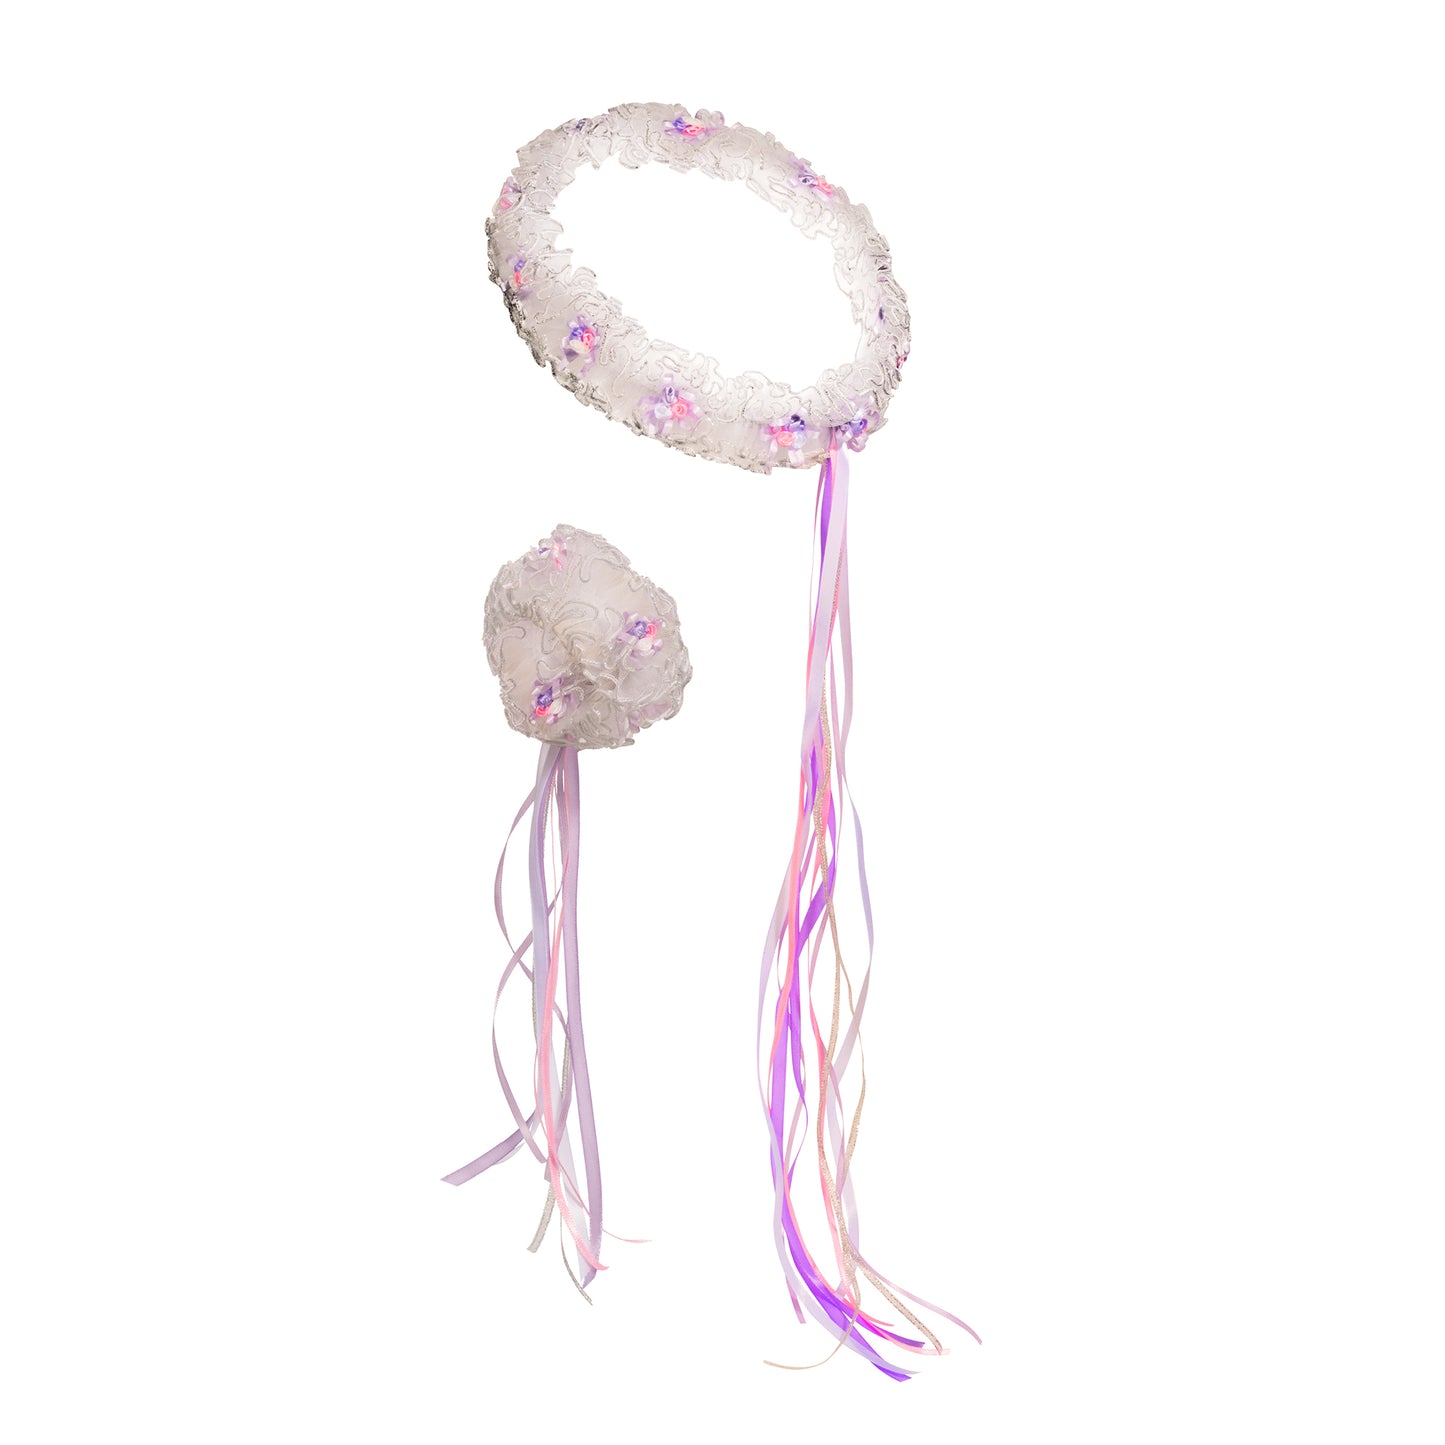 FLOWER WRAP HEADBAND + TWISTER in eco-friendly Dreamy Dress-Ups cotton gift bag